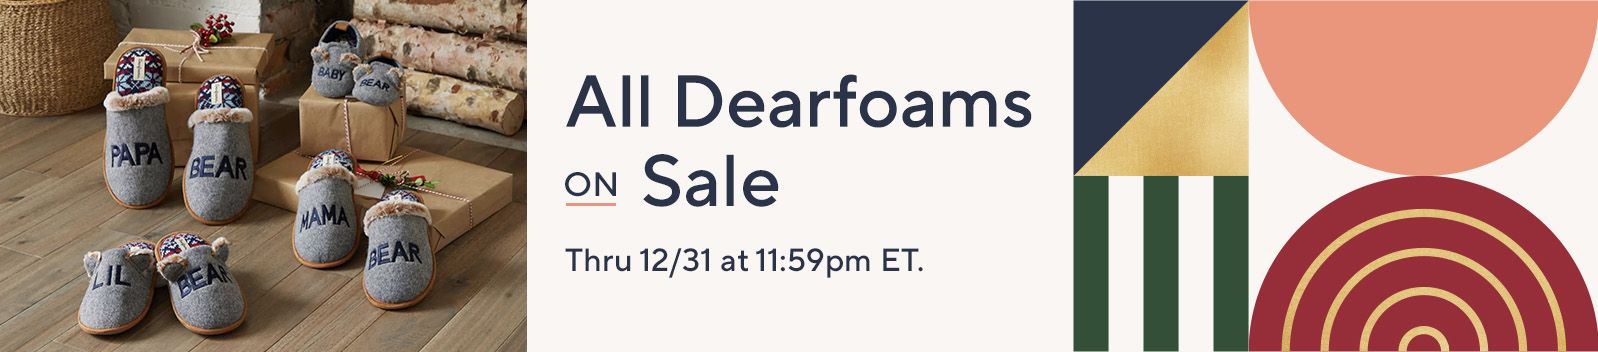 All Dearfoams on Sale  Thru 12/31 at 11:59pm ET.